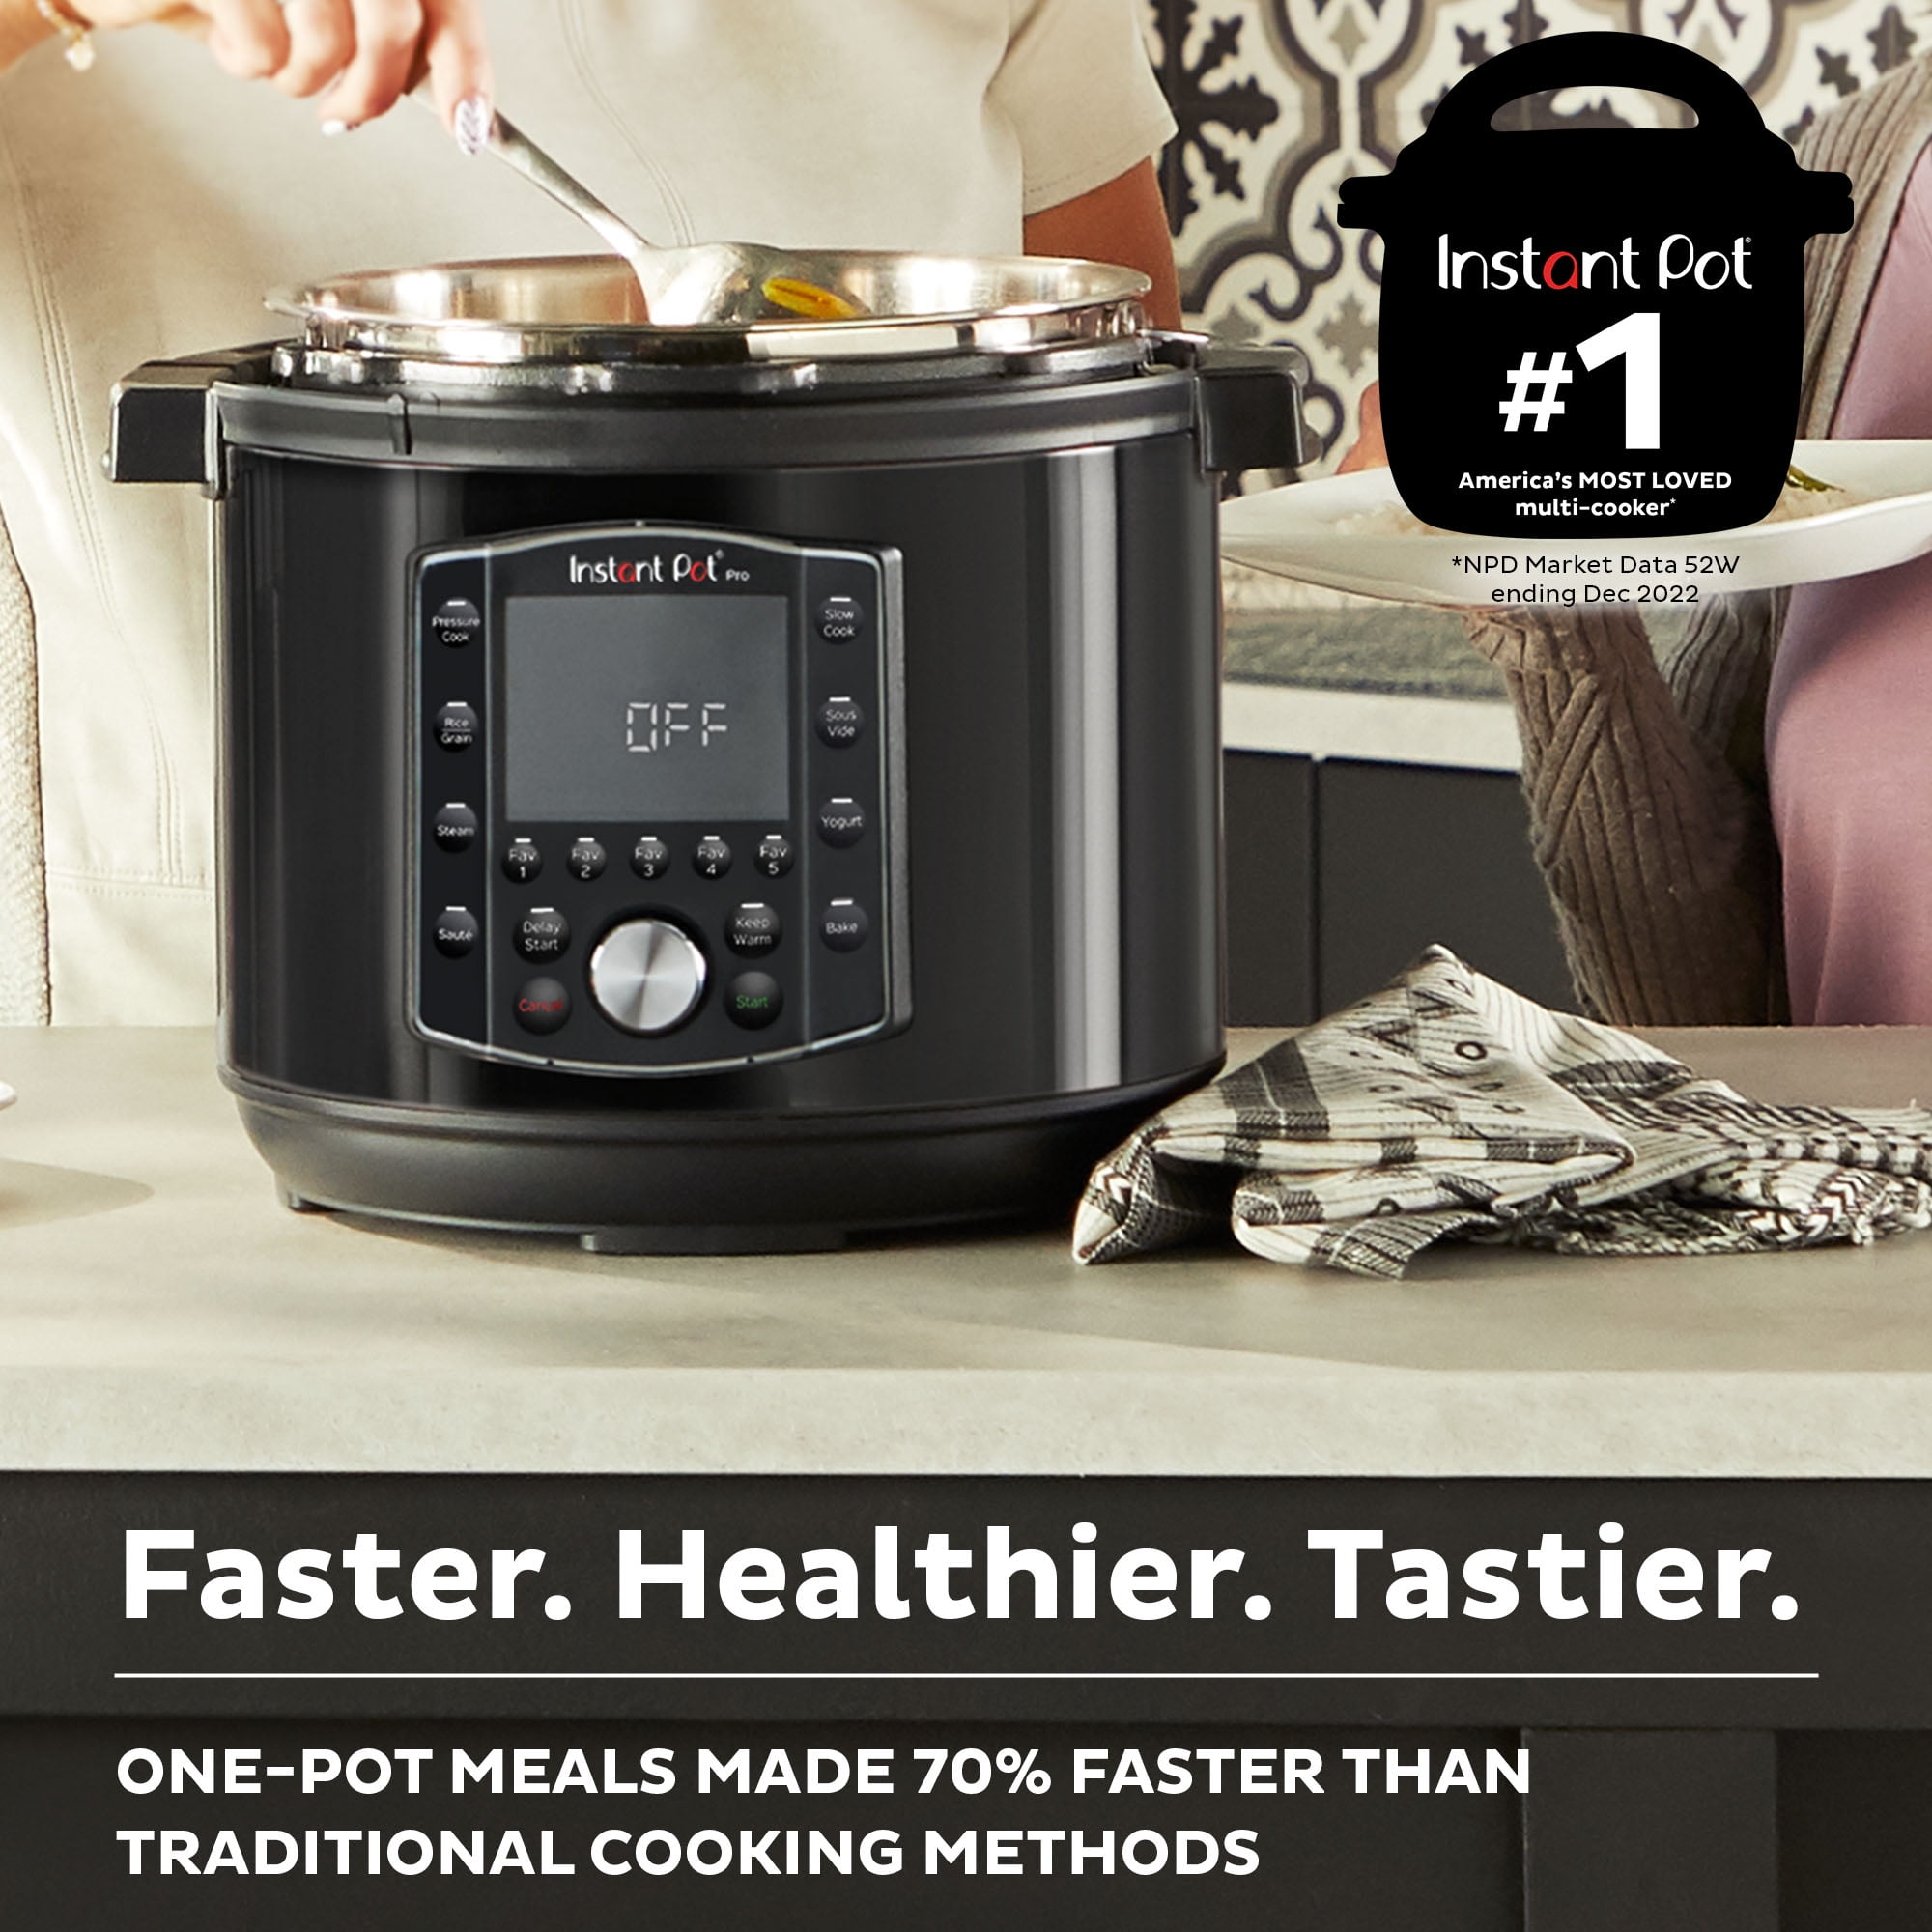  Instant Pot Pro 10-in-1 Pressure Cooker, Slow Cooker,  Rice/Grain Cooker, Steamer, Sauté, Sous Vide, Yogurt Maker, Sterilizer, and  Warmer, Includes App With Over 800 Recipes, Black, 6 Quart: Home & Kitchen